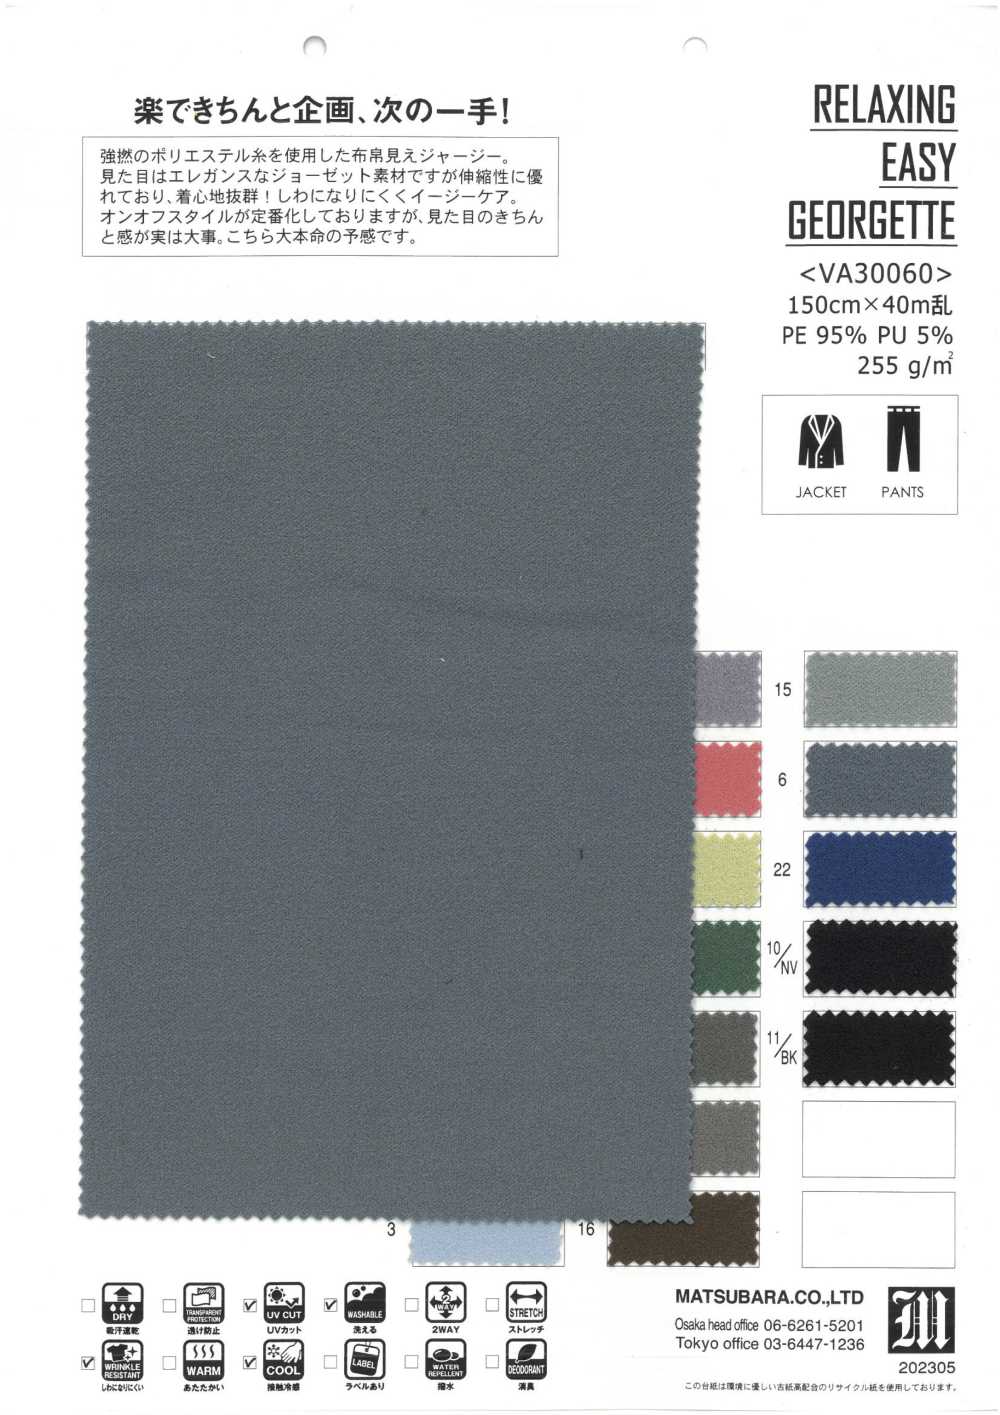 VA30060 GEORGETTE FACILE RELAXANTE[Fabrication De Textile] Matsubara